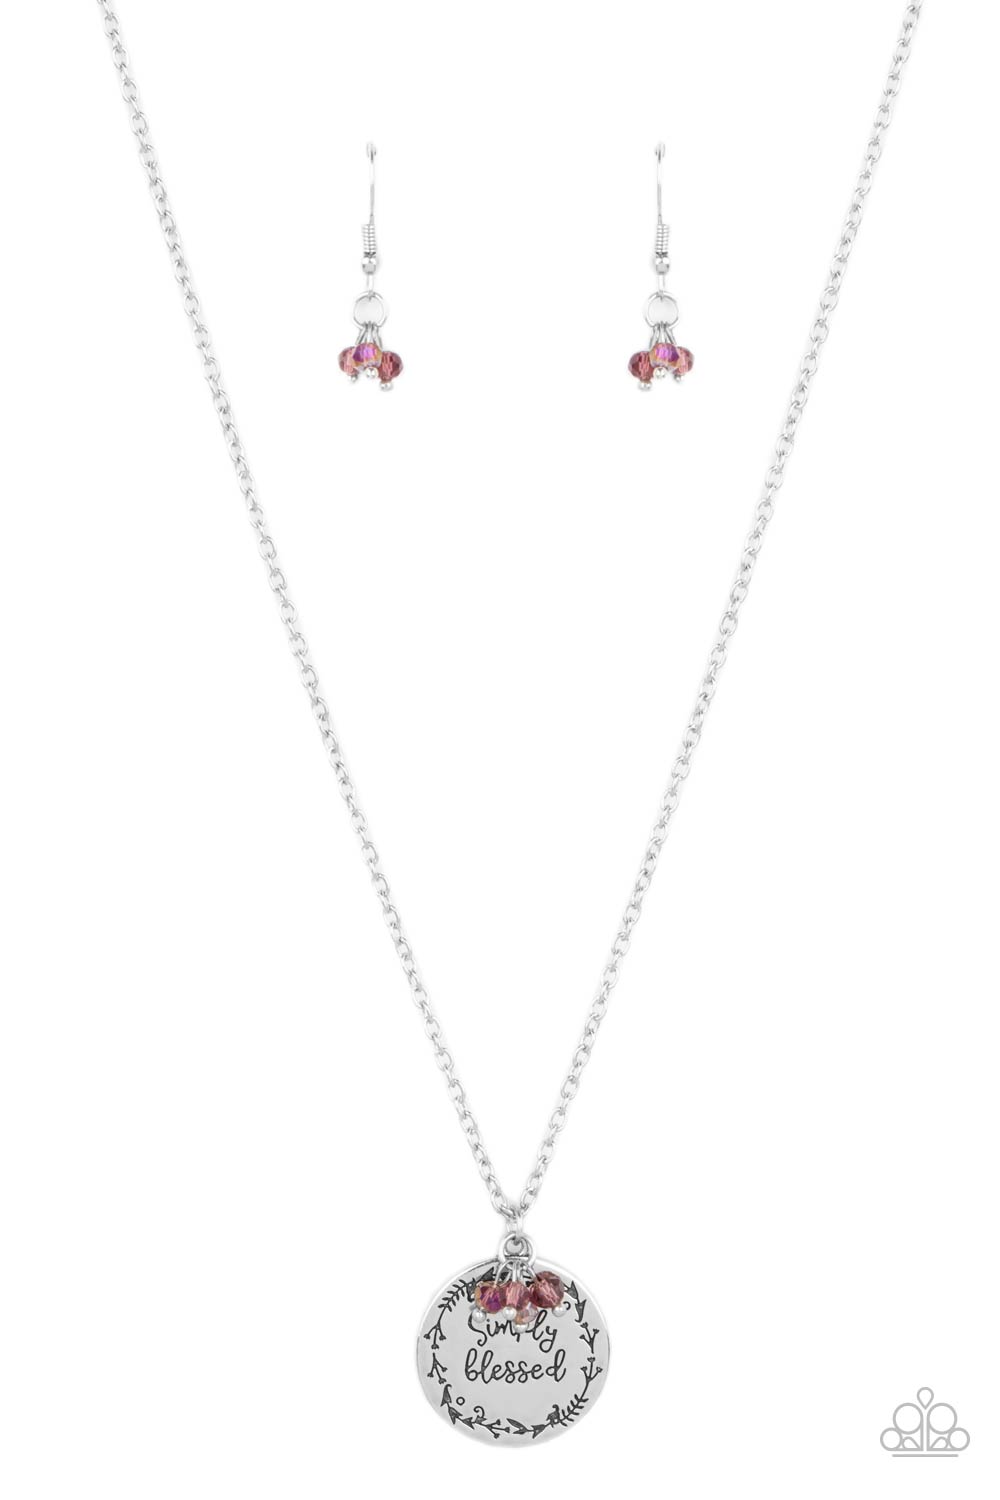 Simple Blessings - Purple (Beads) Necklace freeshipping - JewLz4u Gemstone Gallery